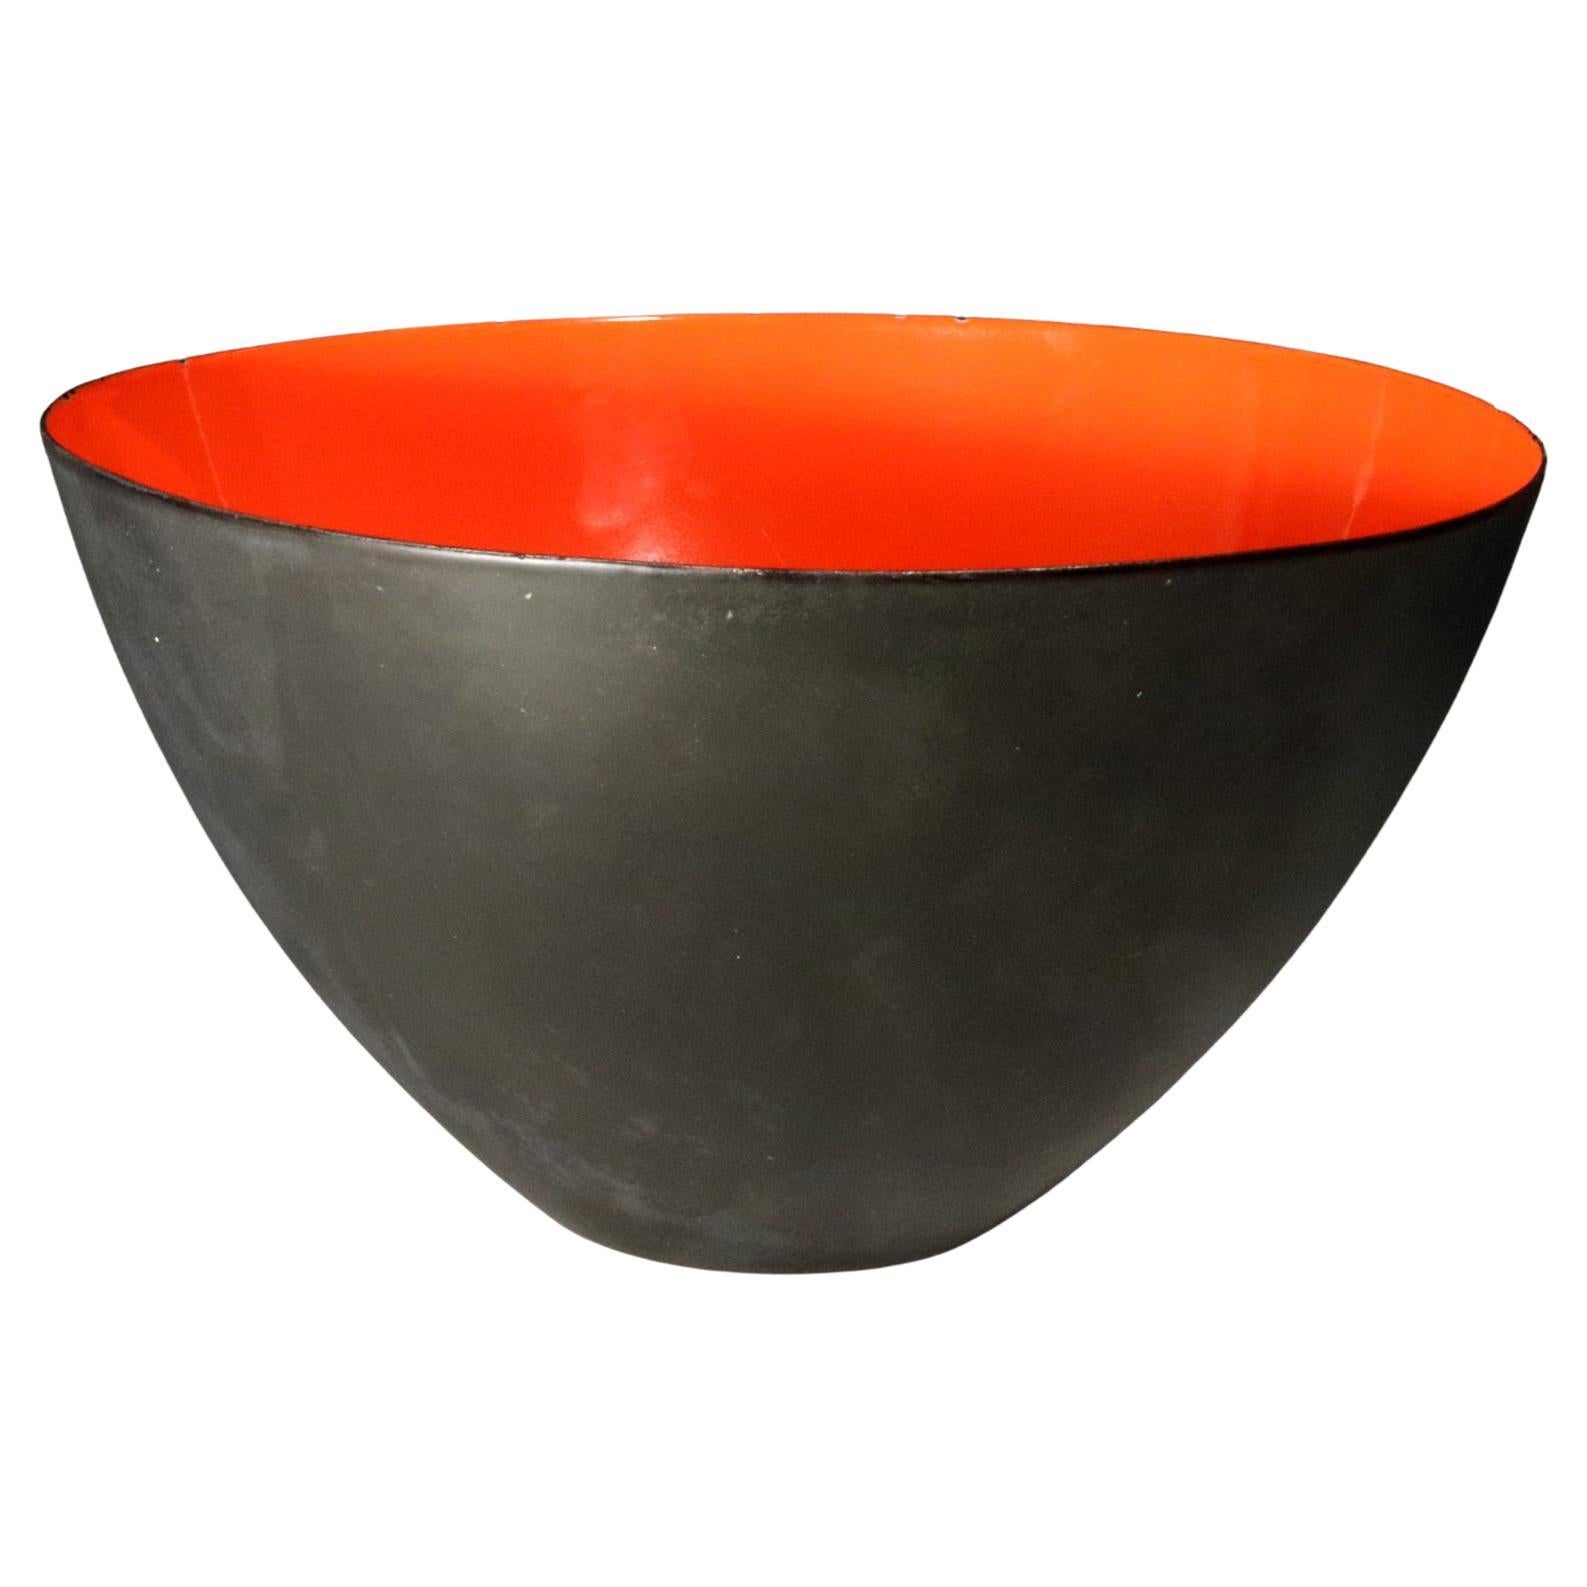 Modernist Kranit Bowl in Black Steel and Red Enamel, by Herbert Krenchel For Sale